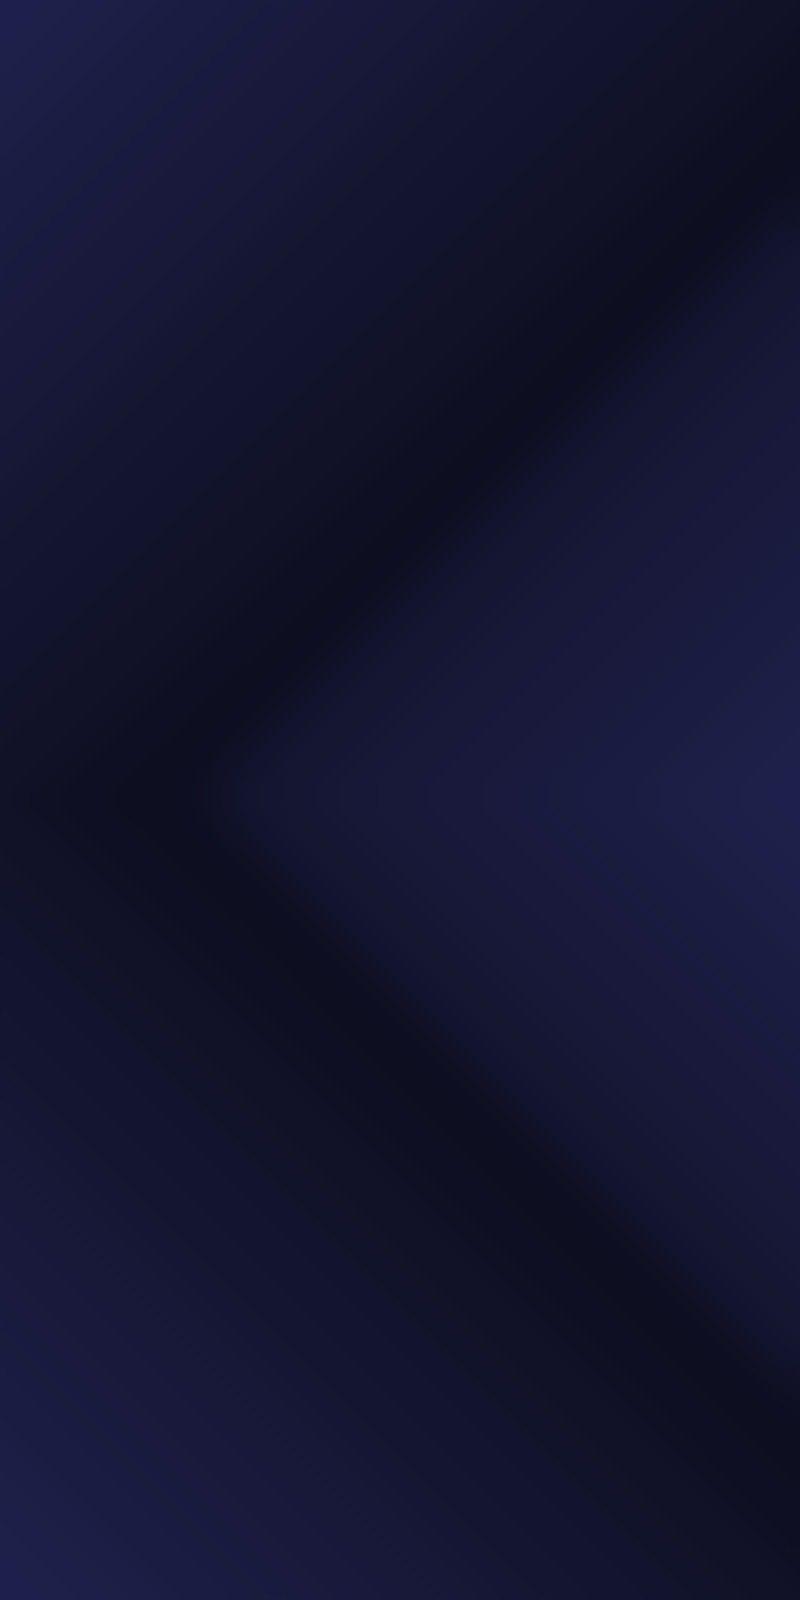 Dark Blue Gradient Backgrounds - Wallpaper Cave